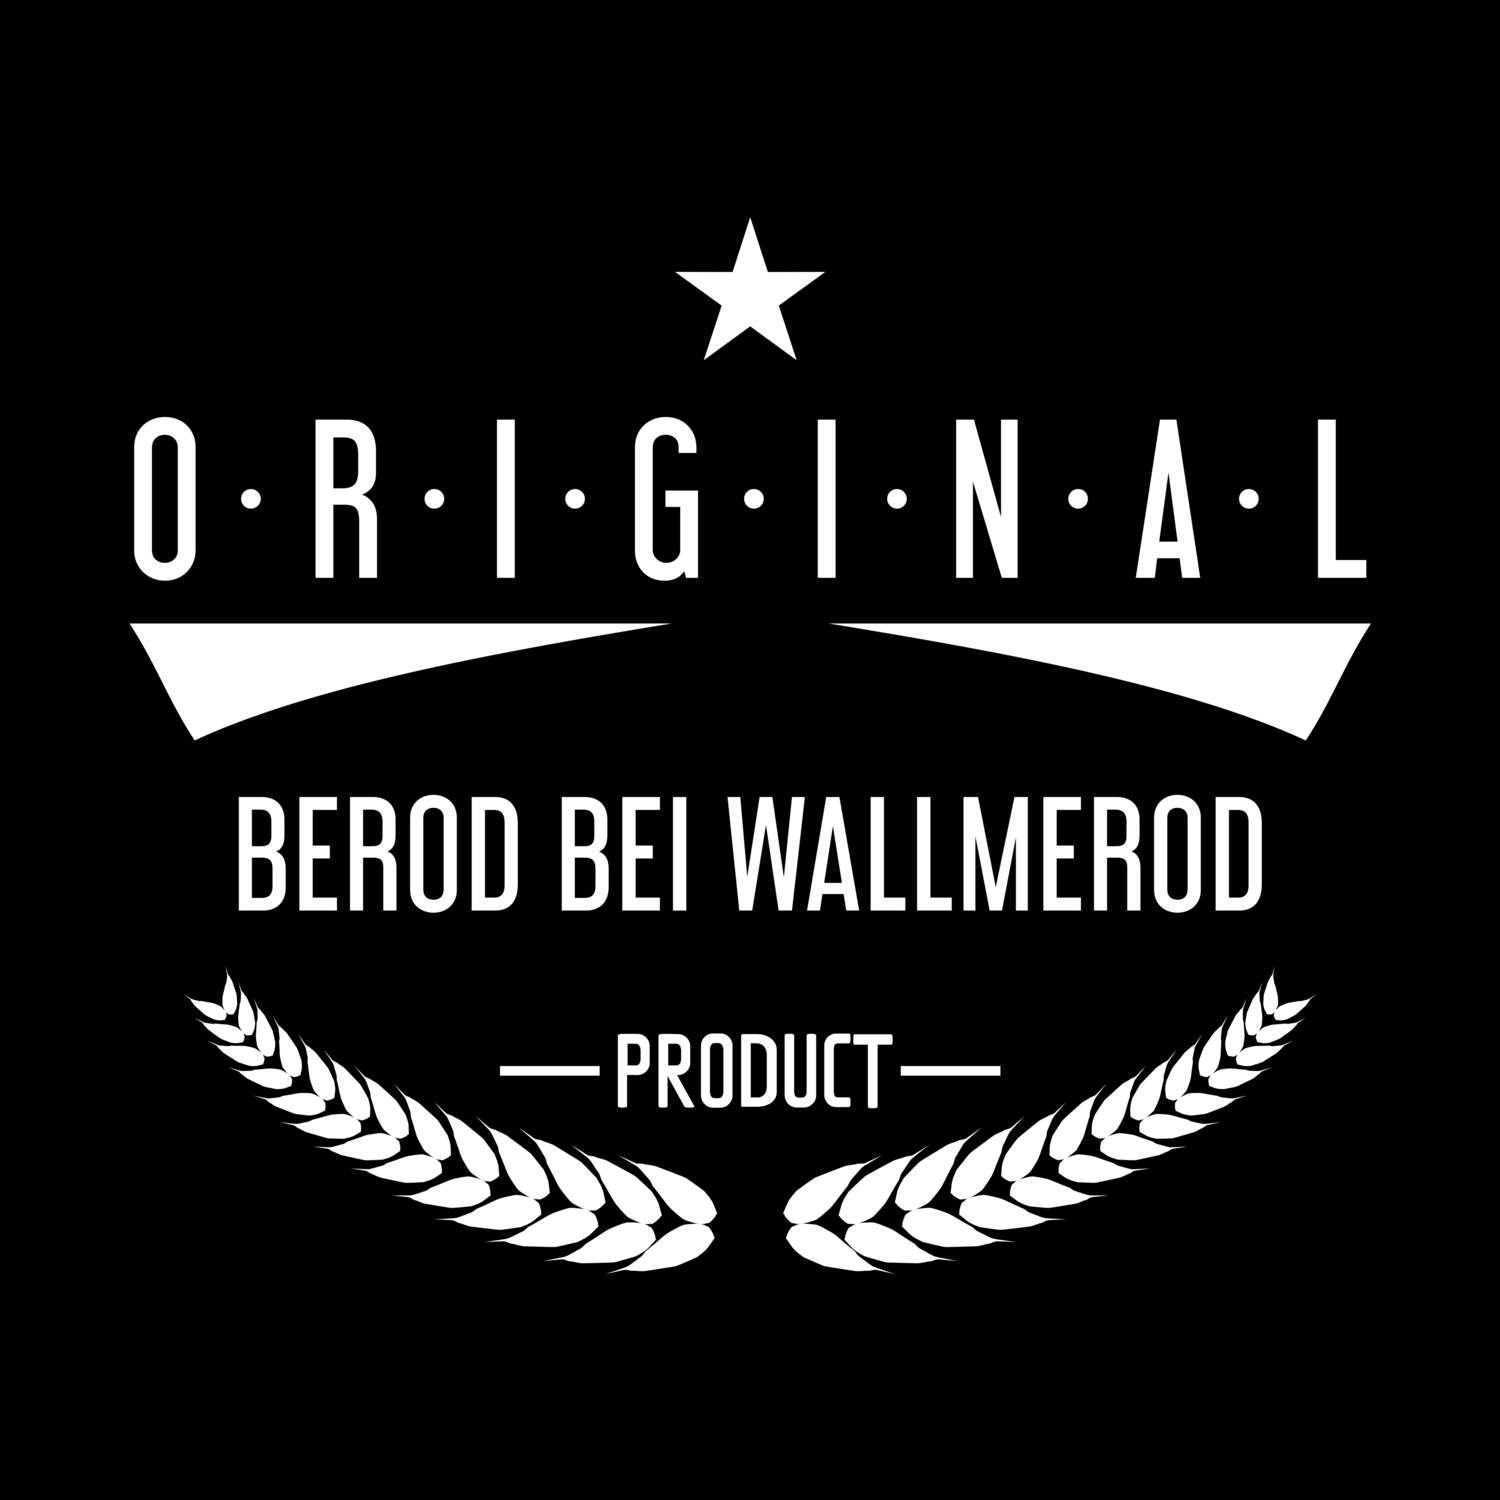 Berod bei Wallmerod T-Shirt »Original Product«